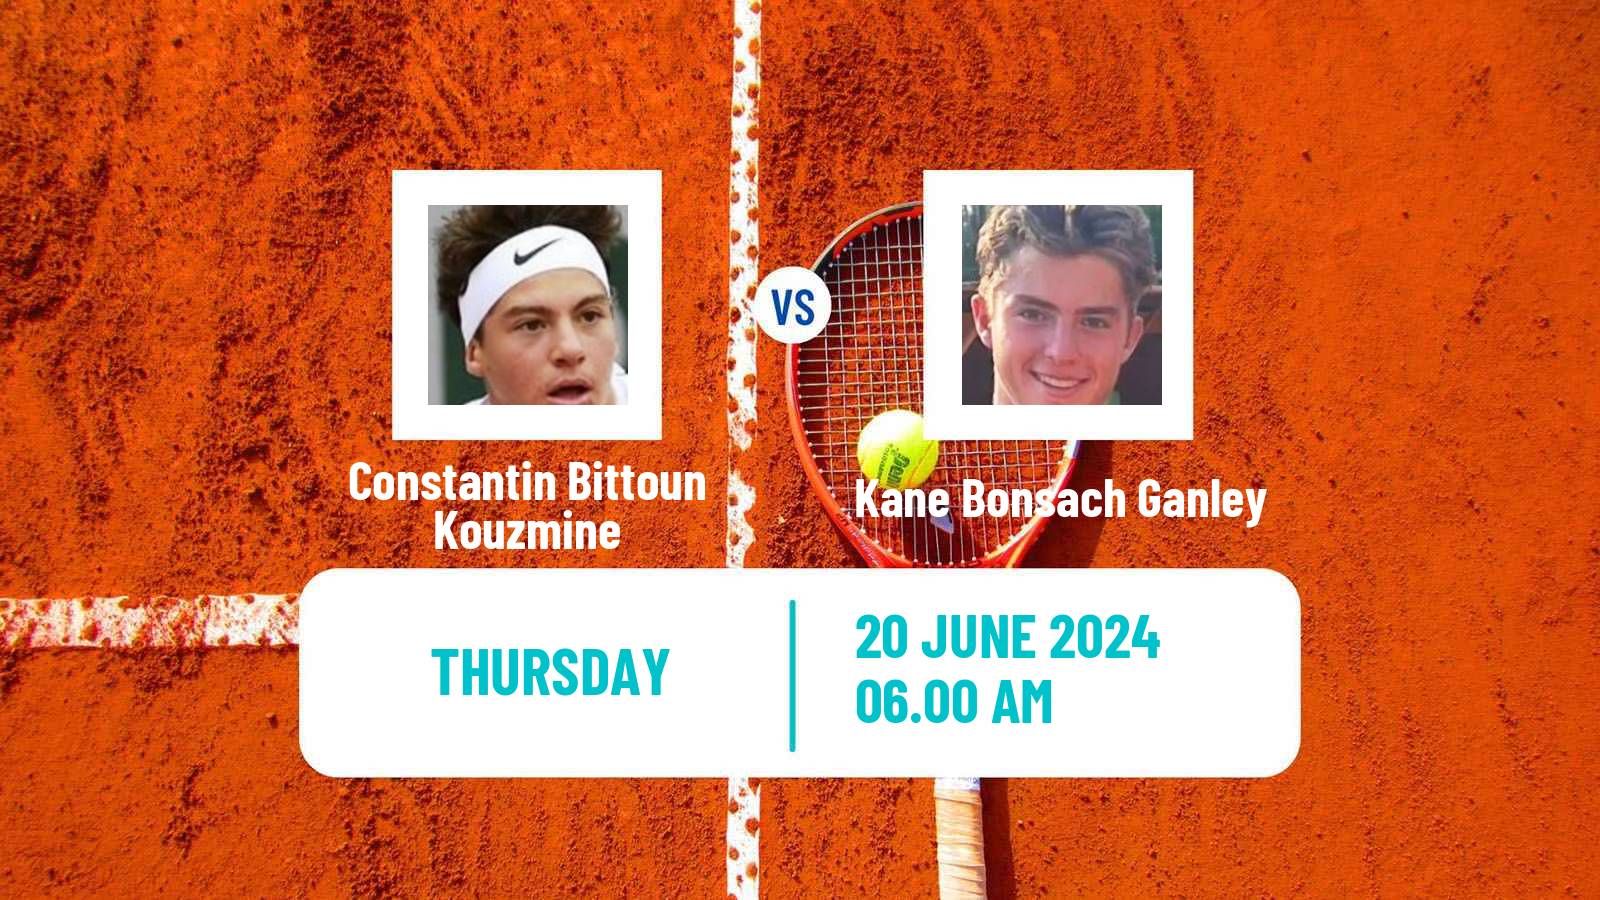 Tennis ITF M15 Casablanca Men Constantin Bittoun Kouzmine - Kane Bonsach Ganley